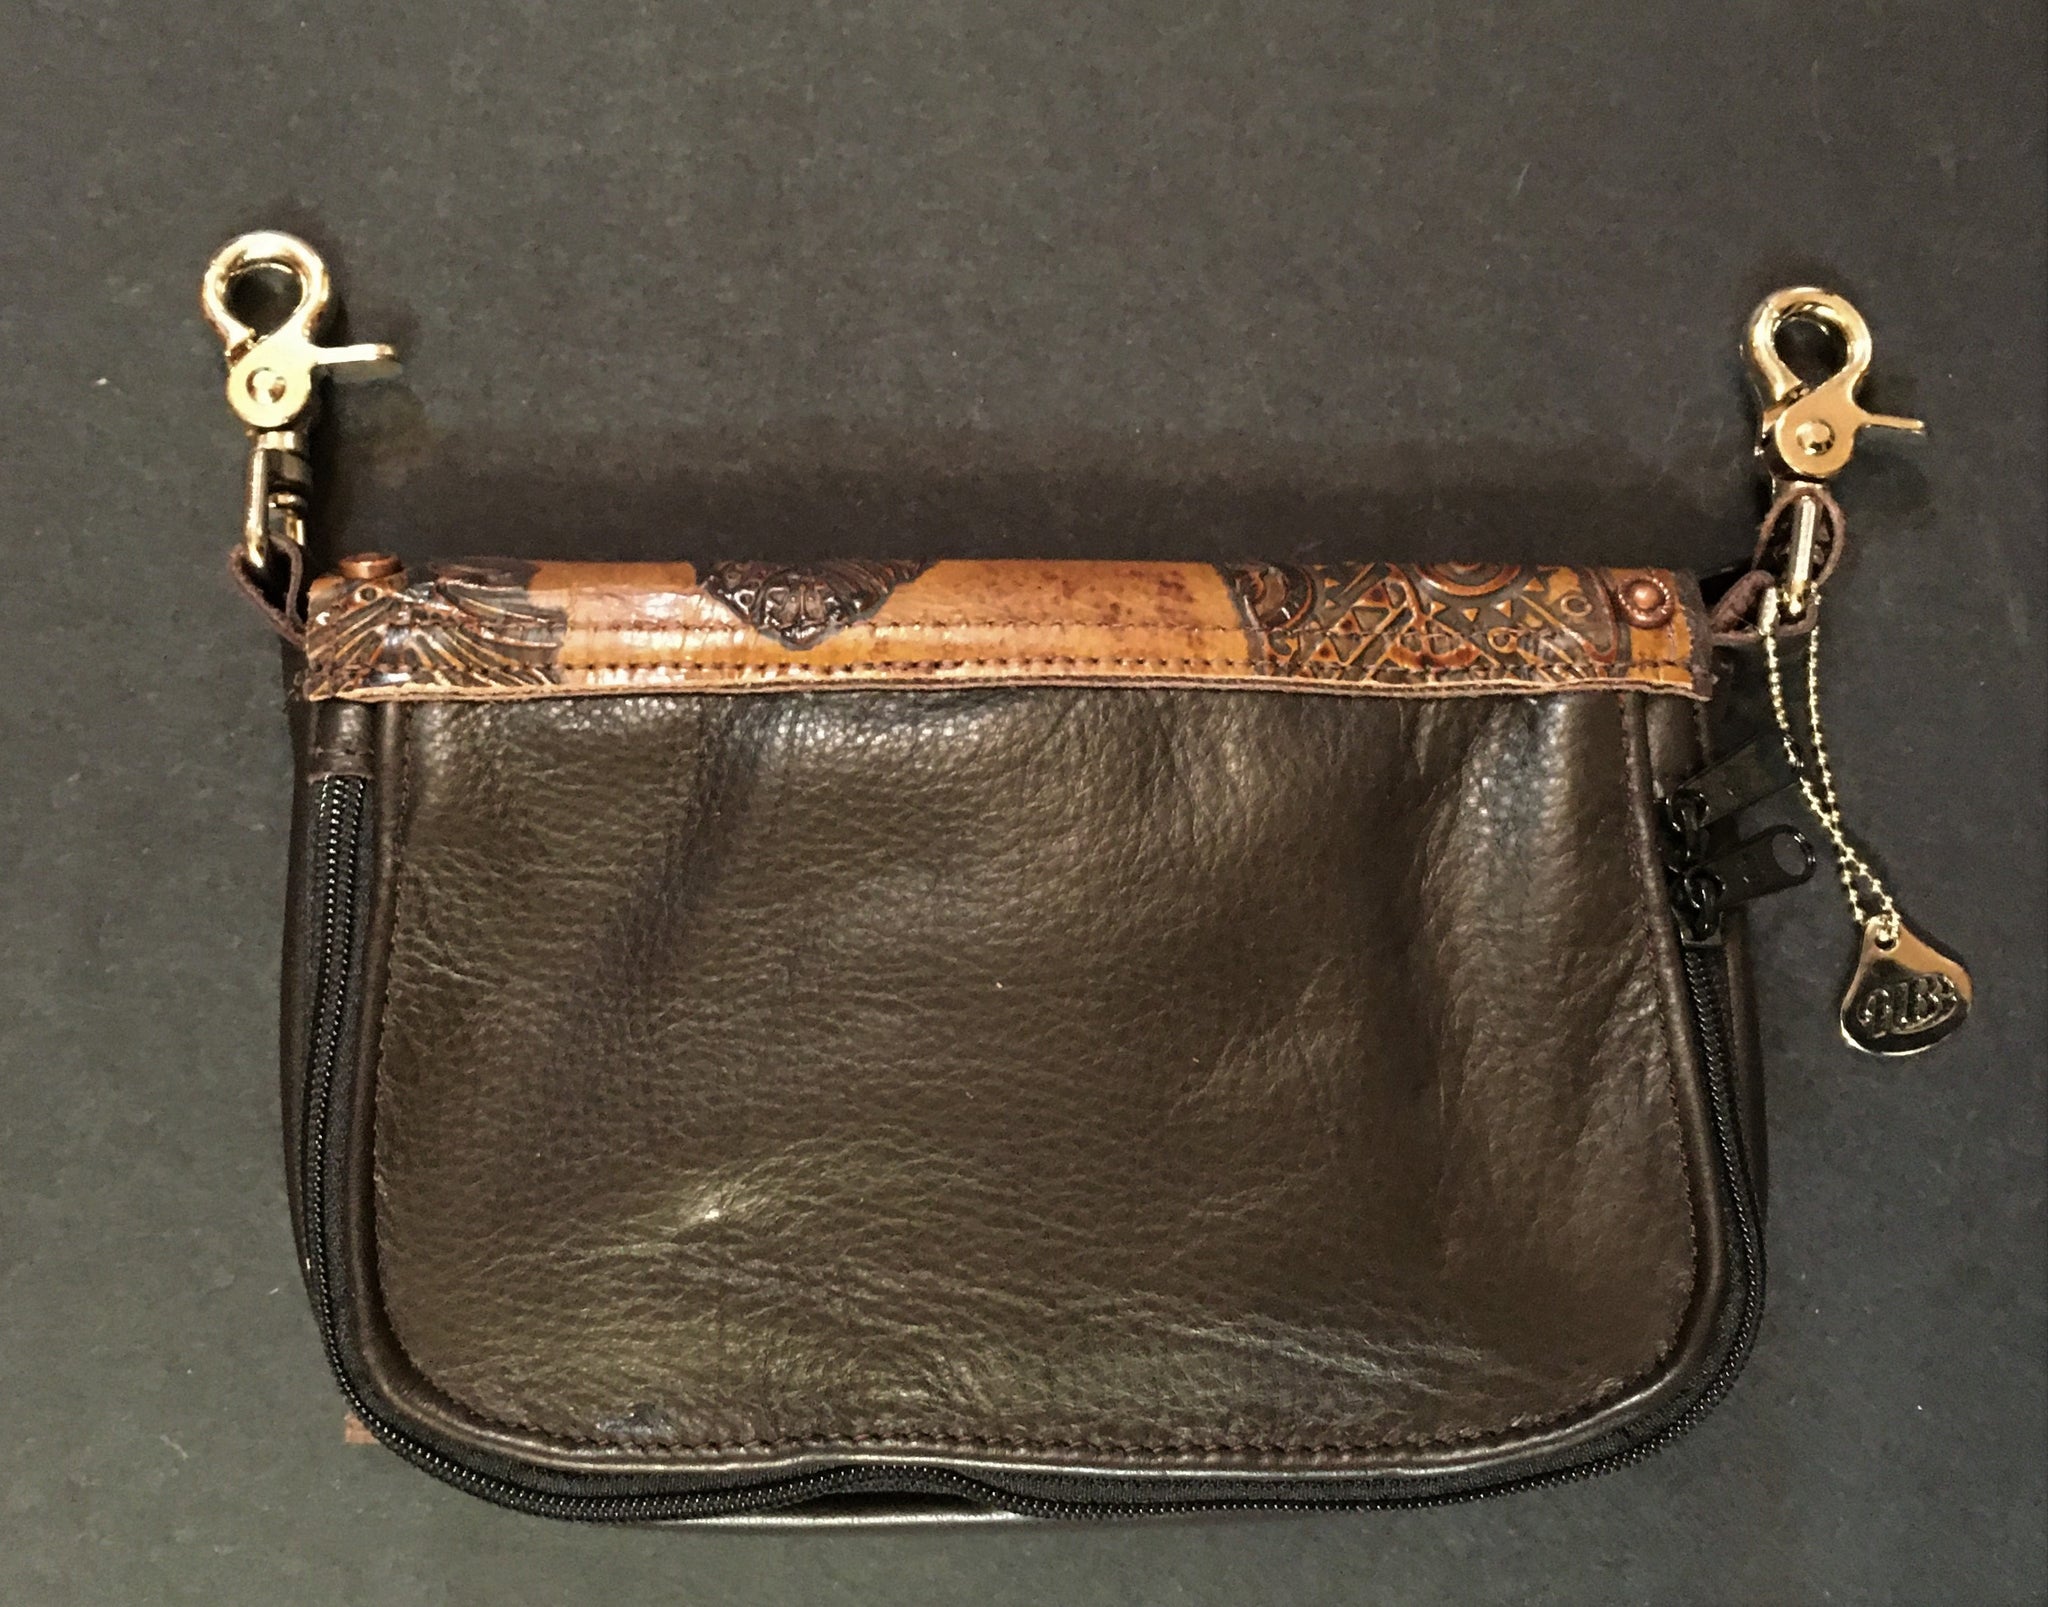 Kate Shoulder Bag - Upgrade of a Favorite Classic Silhouette | Beau + Arrow